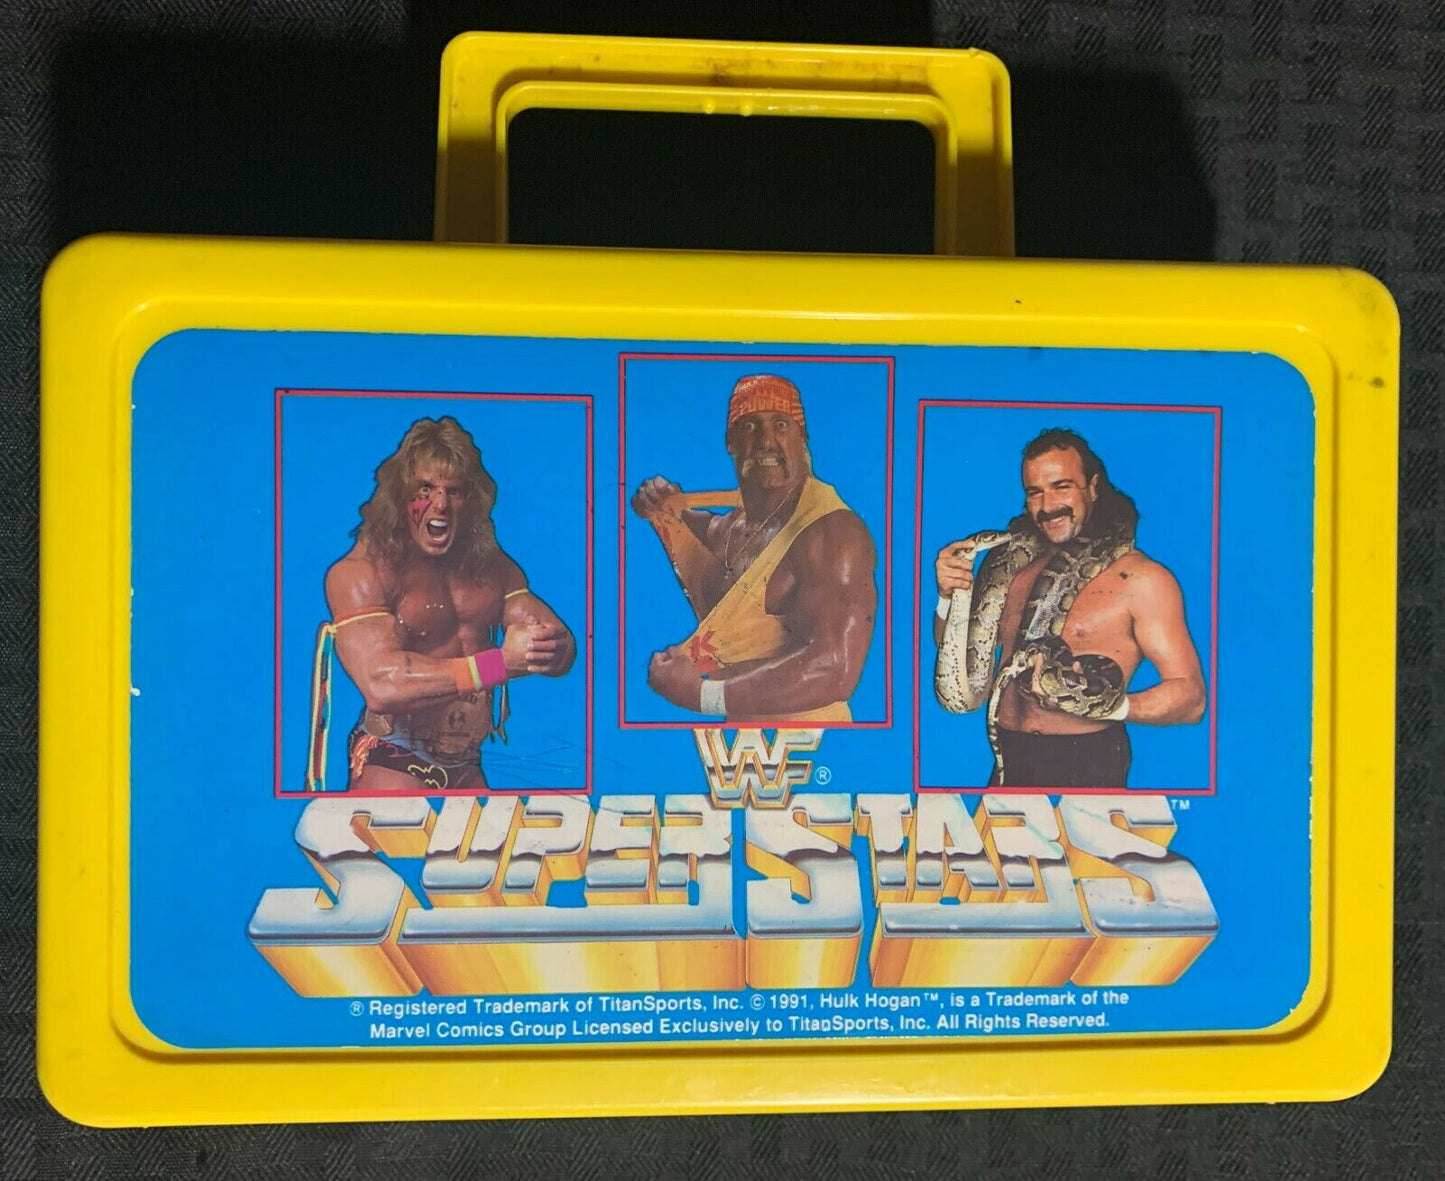 WWf superstars 1991 Lunch box